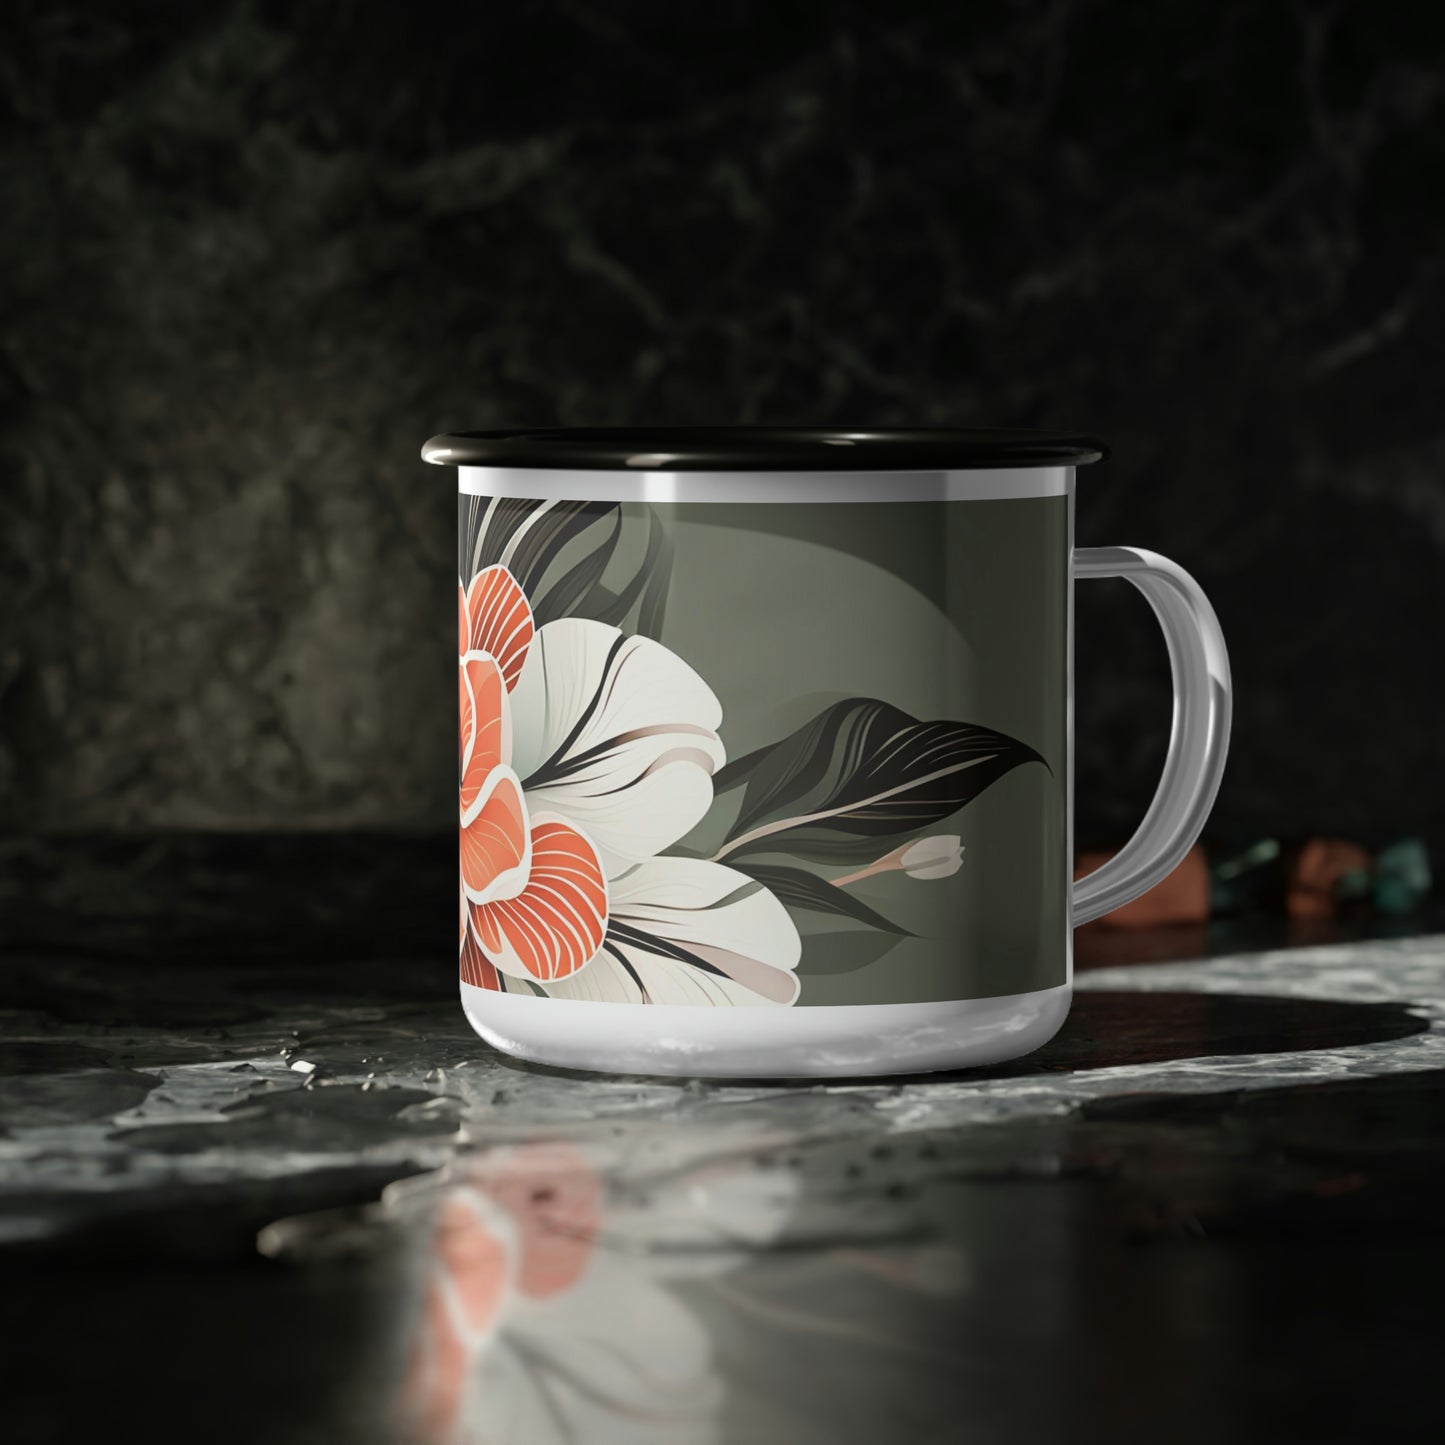 Art Deco Flower, Enamel Camping Mug for Coffee, Tea, Cocoa, or Cereal - 12oz